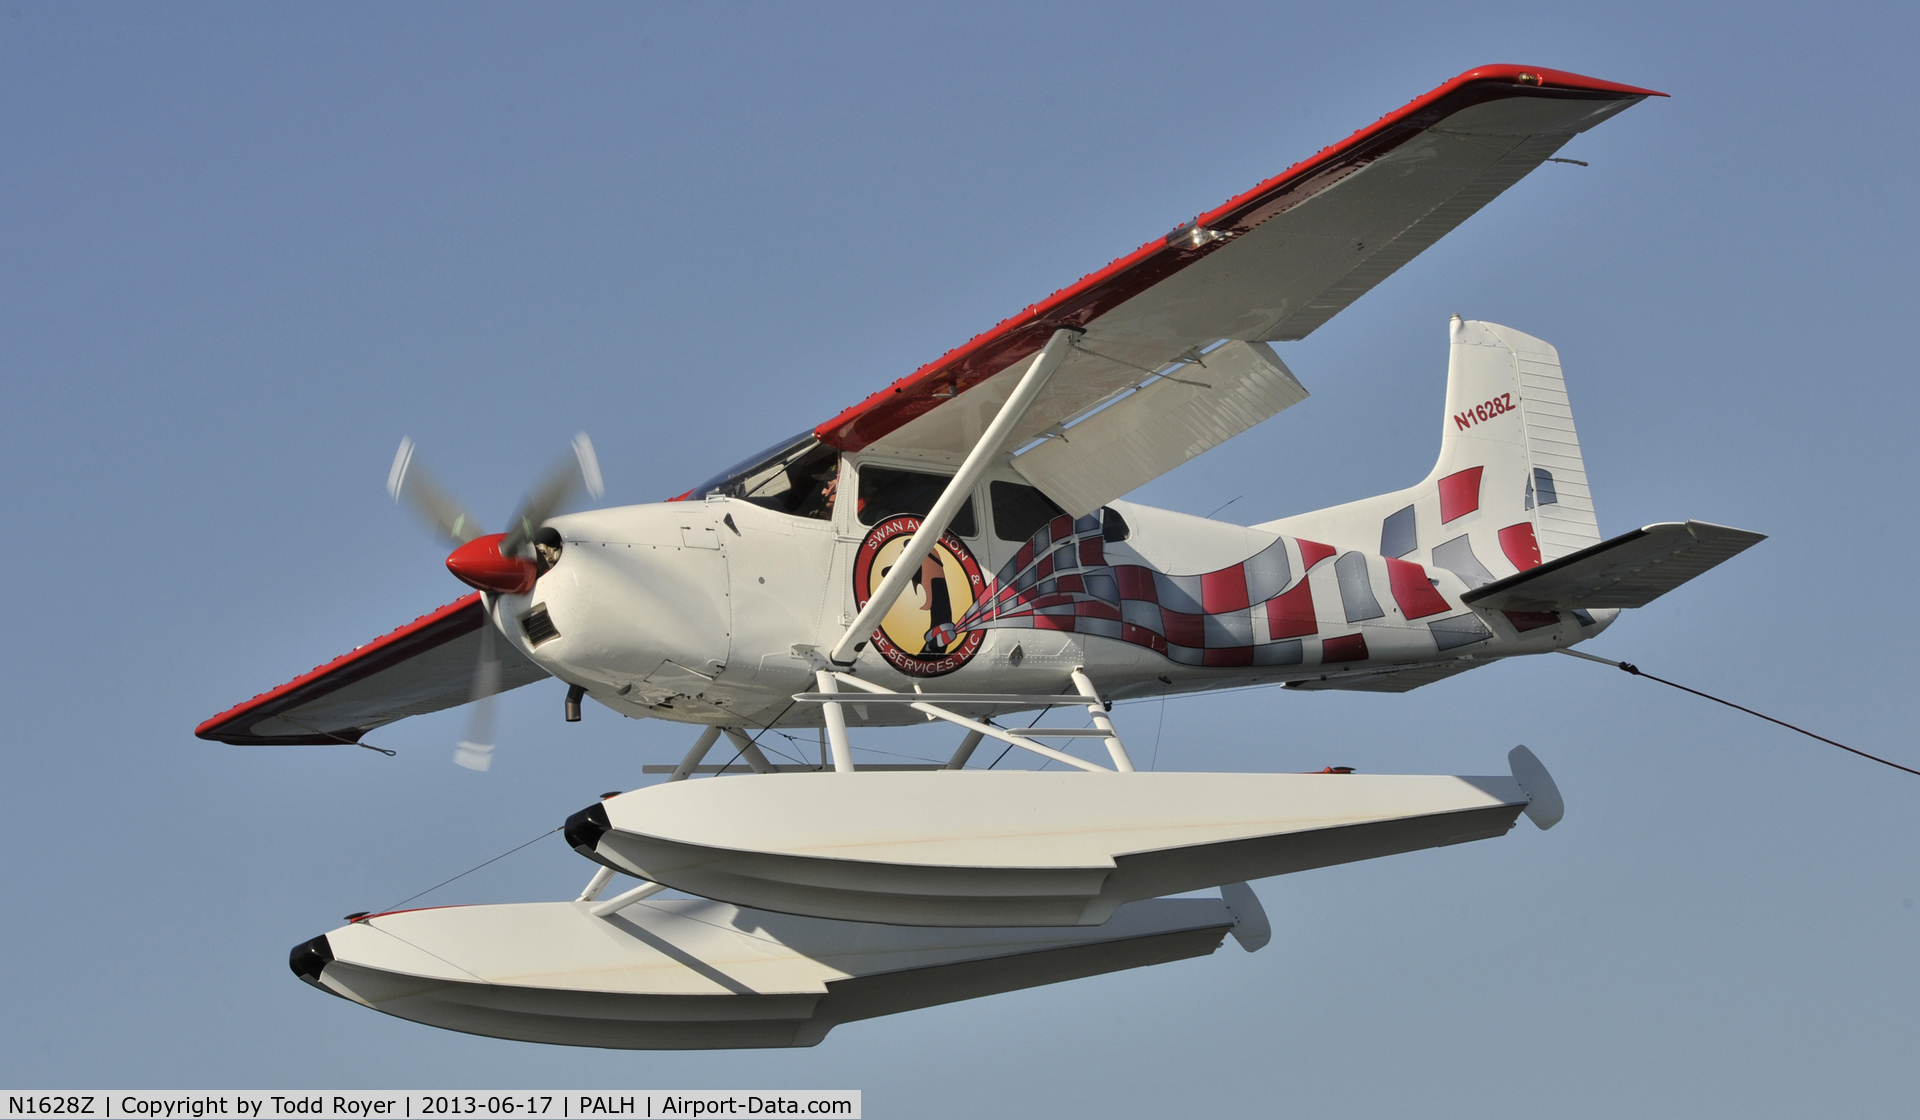 N1628Z, 1962 Cessna 185A Skywagon C/N 185-0428, Landing at Lake Hood